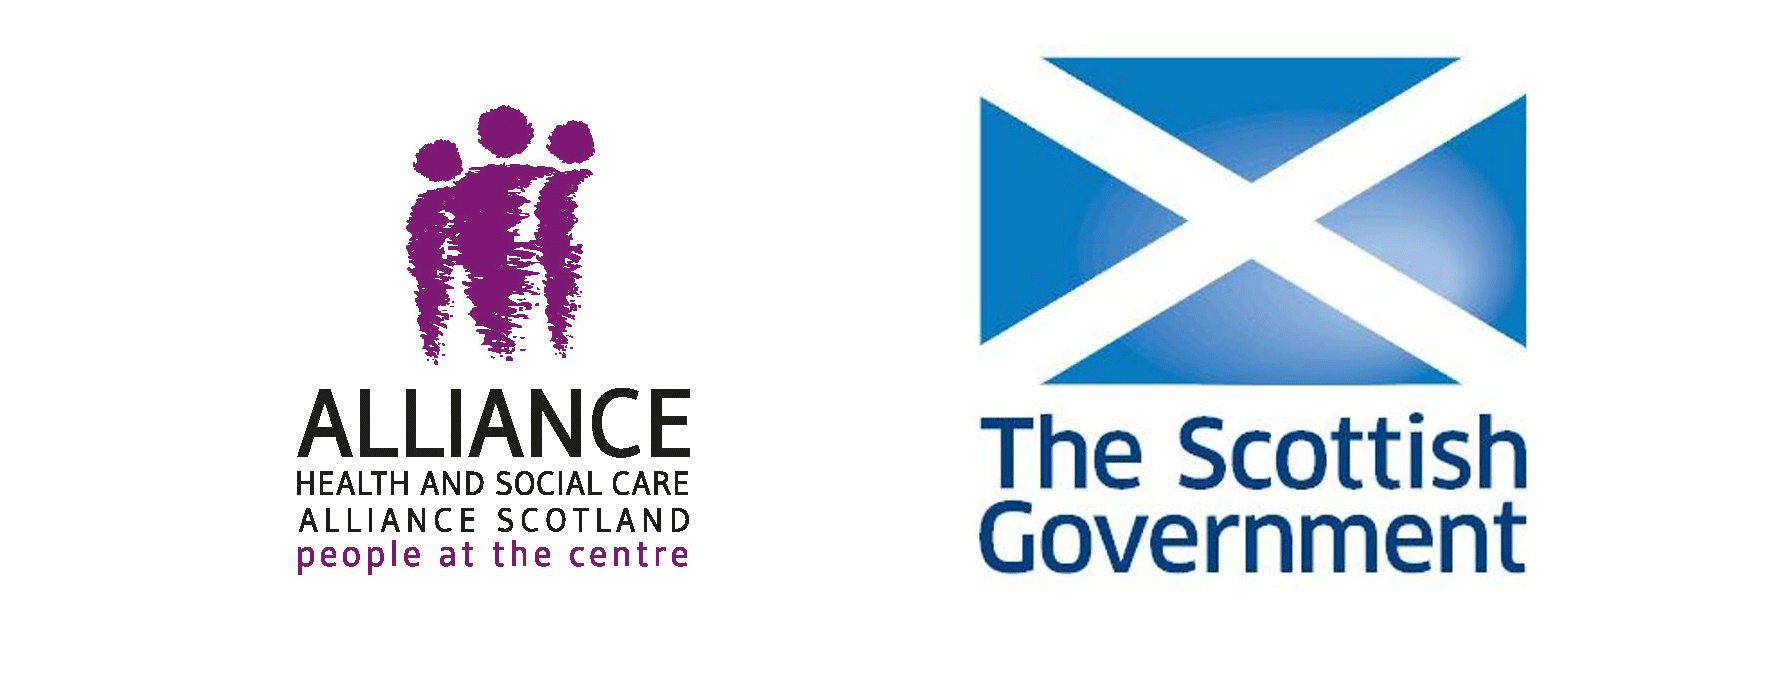 Alliance-Scottish-Government-Logos